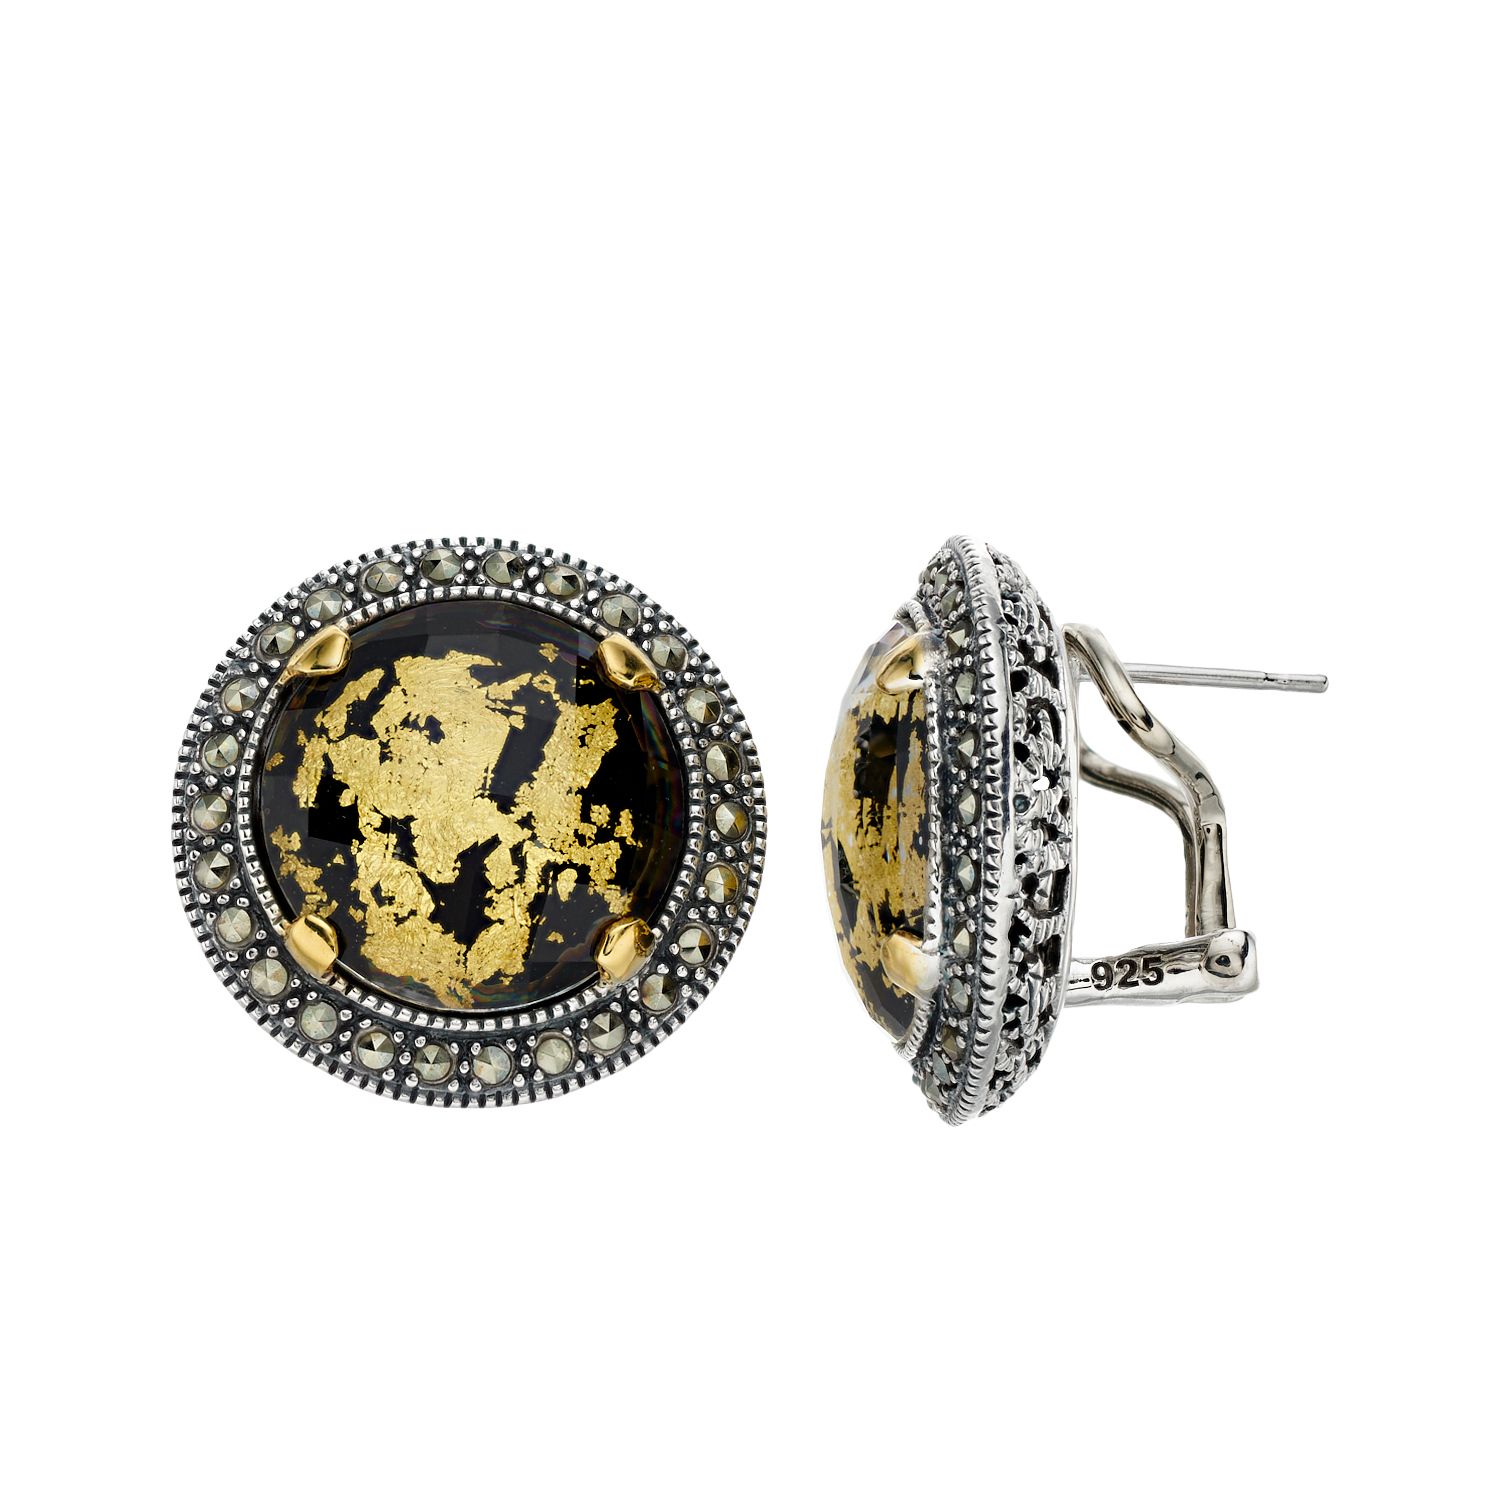 Image for Lavish by TJM Sterling Silver Crystal Gold Leaf Black Onyx Doublet & Marcasite Omega Earrings at Kohl's.